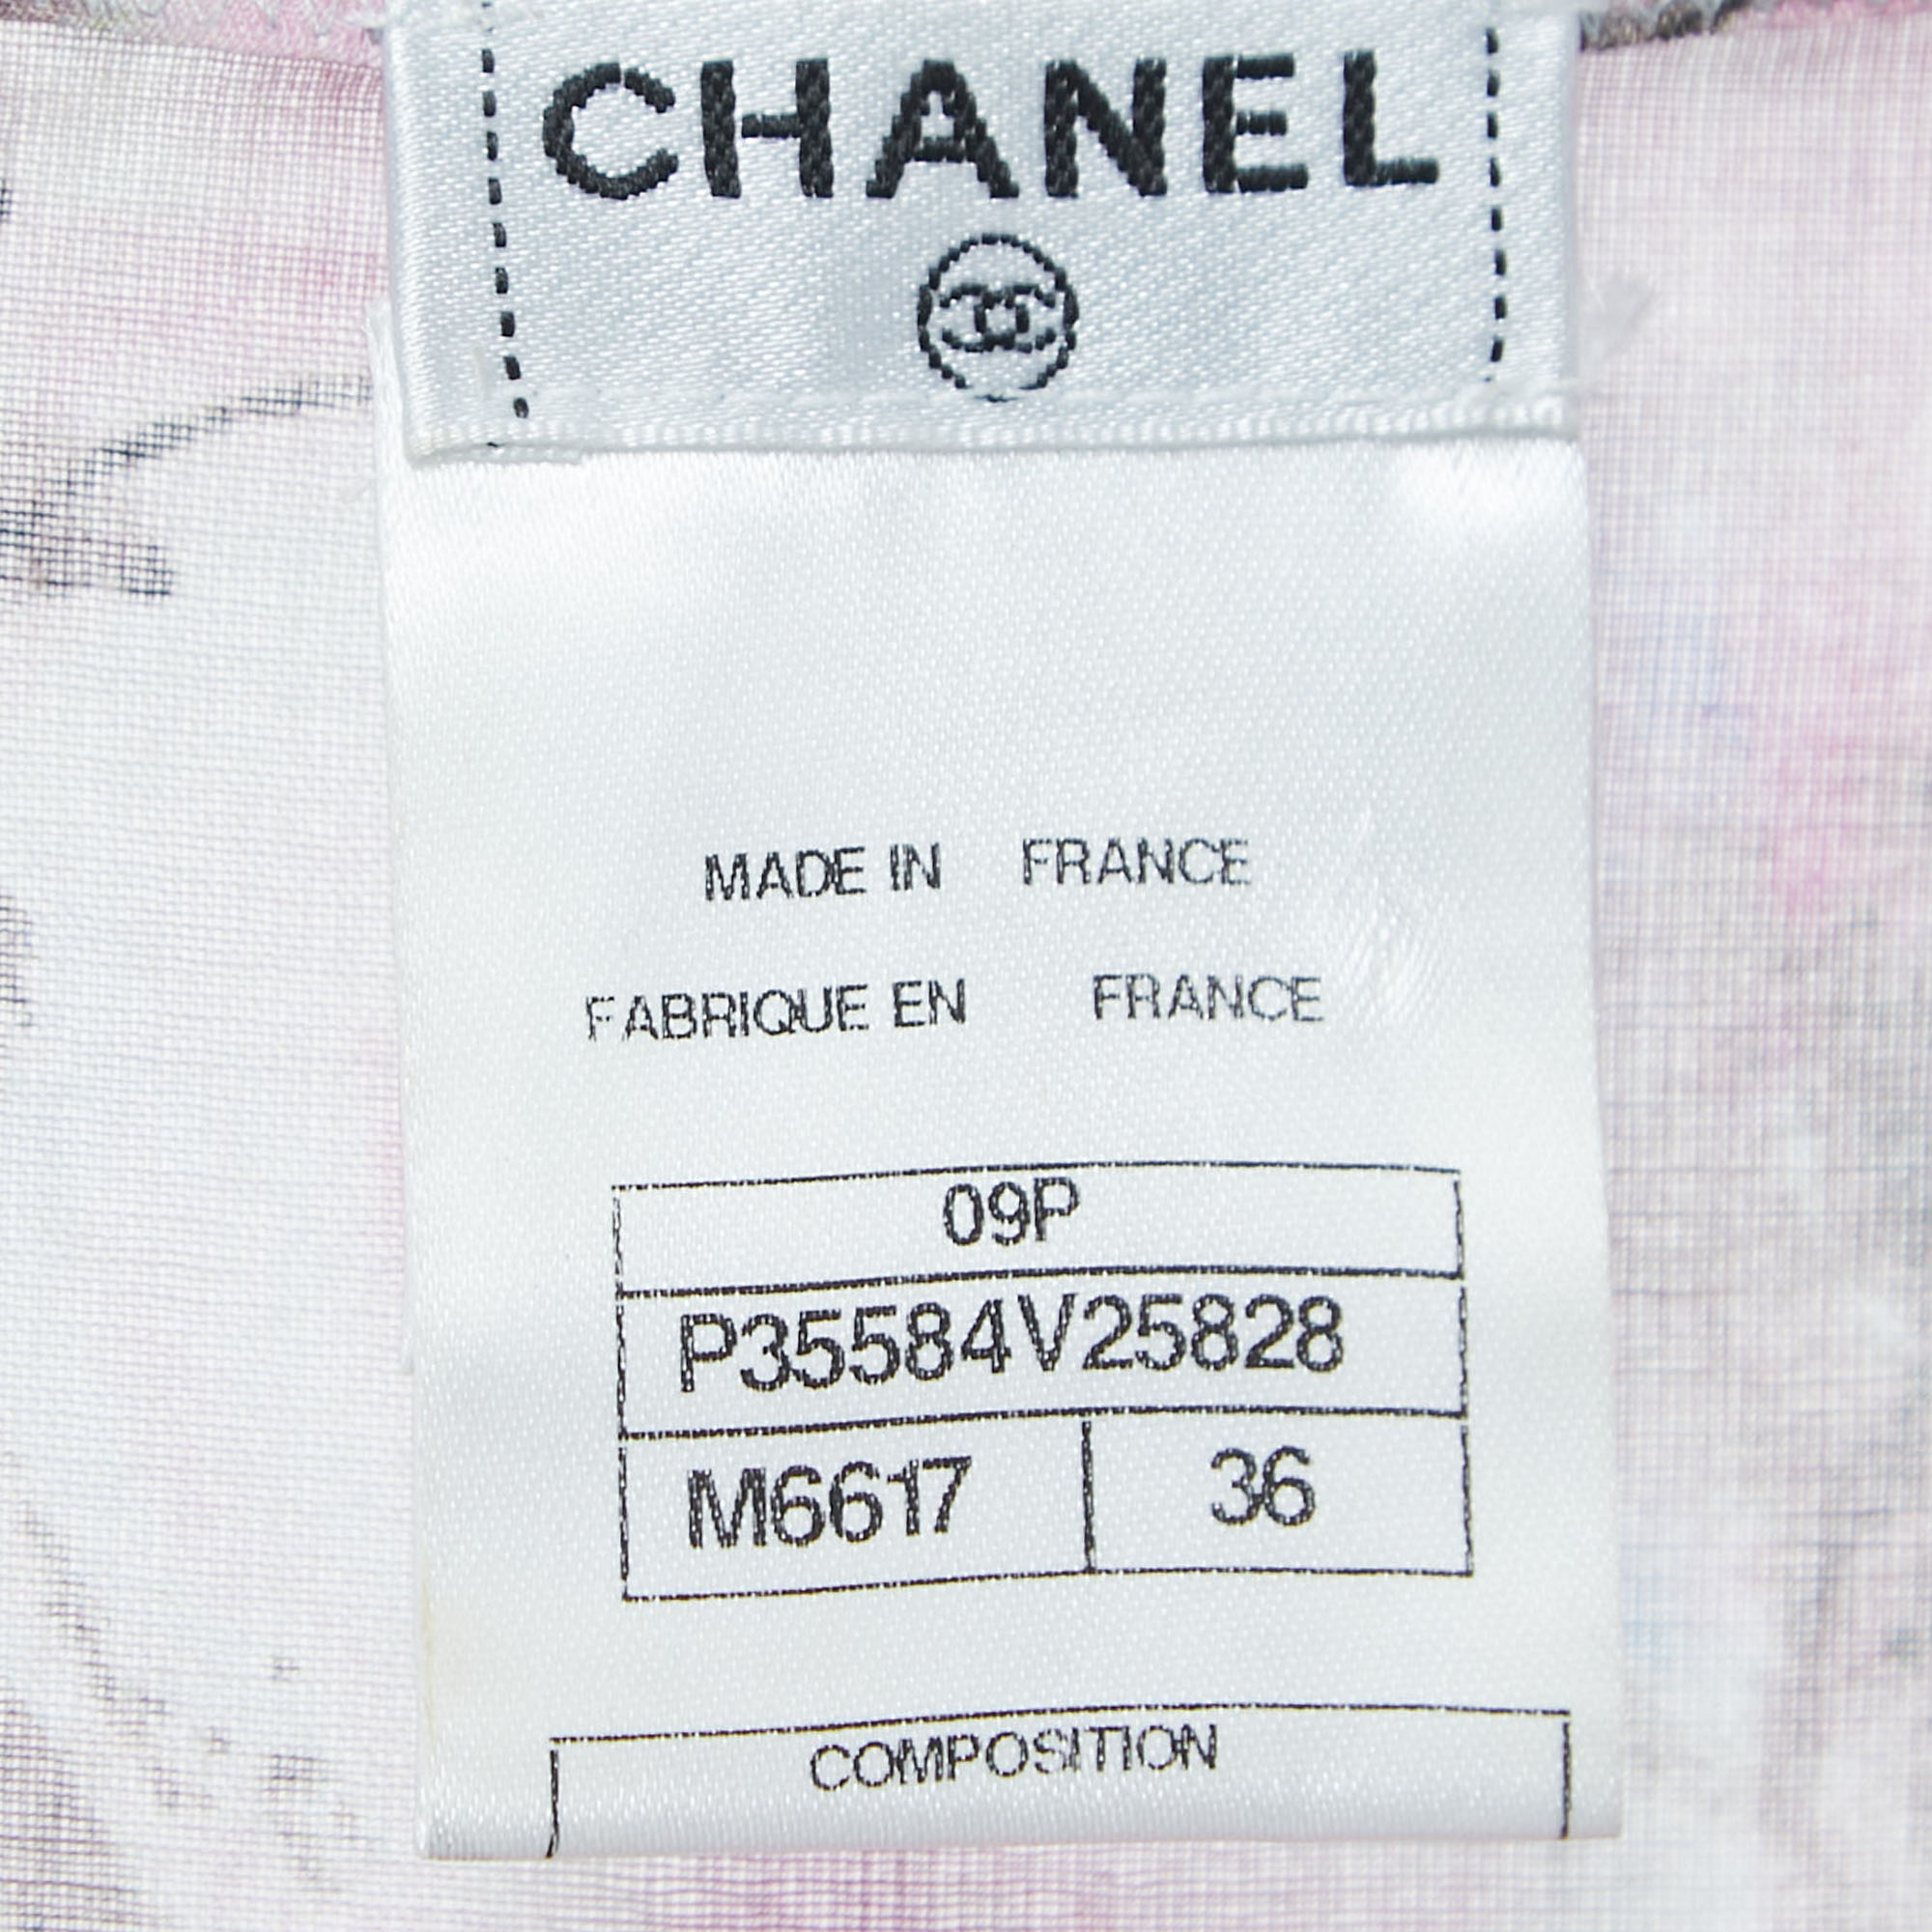 Chanel Pink Camelia Print Cotton Bow-Detail Dress S